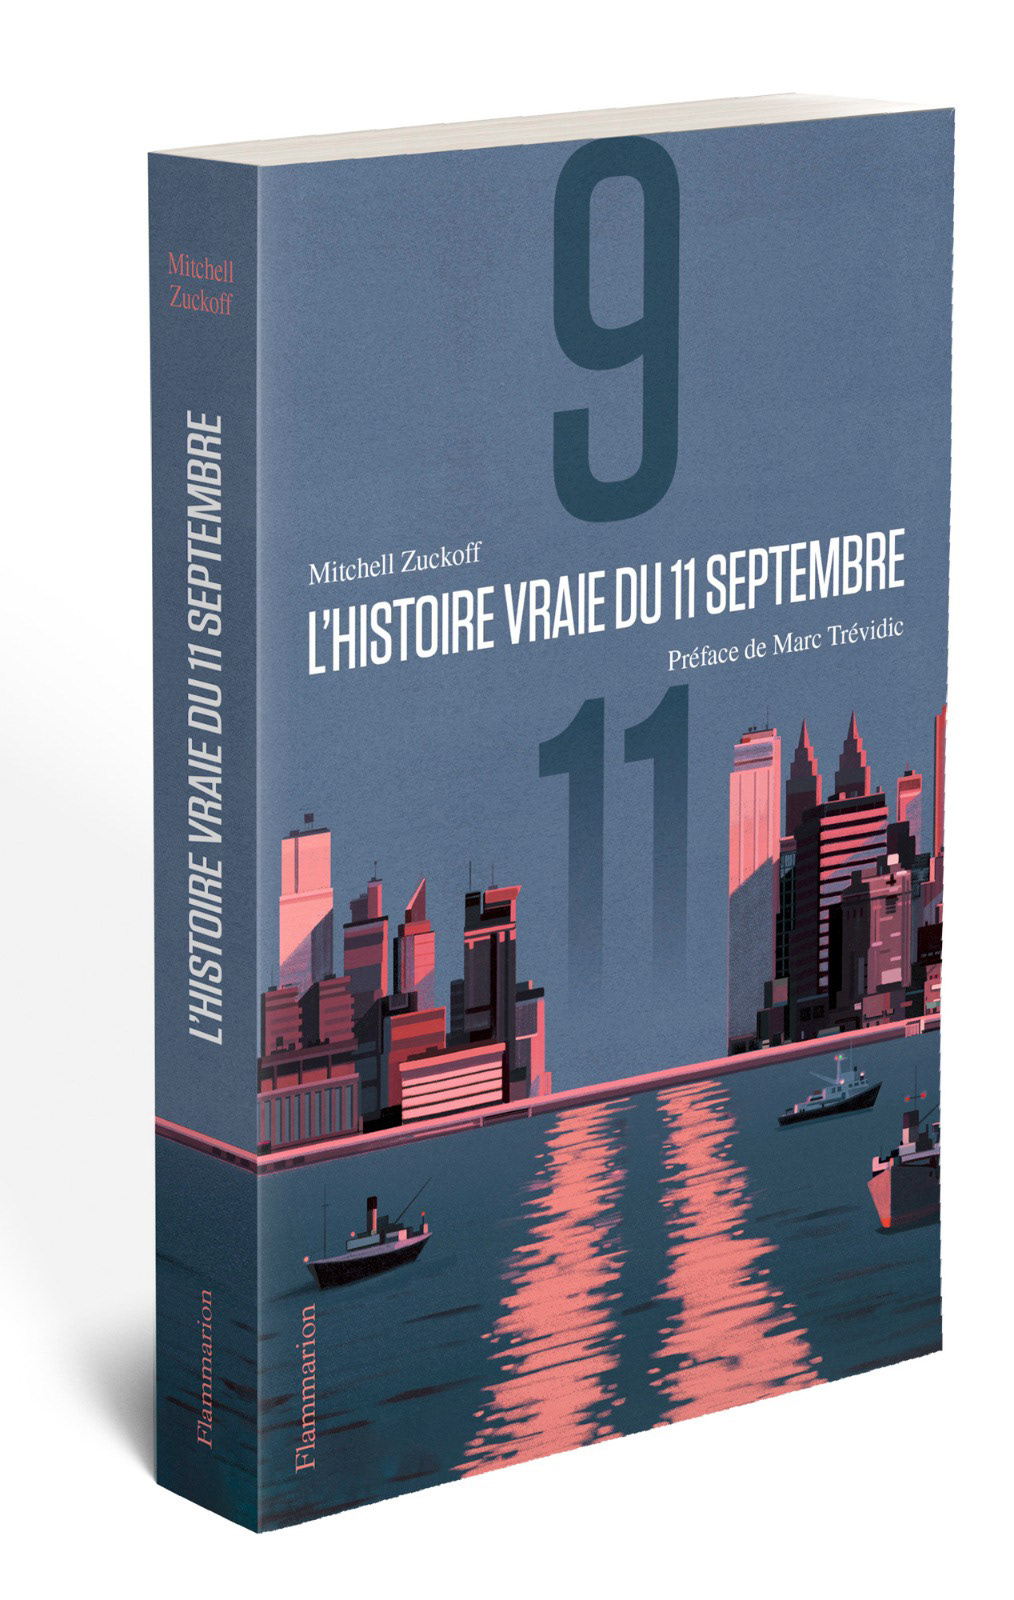 9 11 angels book Francescobongiorni.com Illustrated book ILLUSTRATION  New York September 11 twin towers World Trade Center